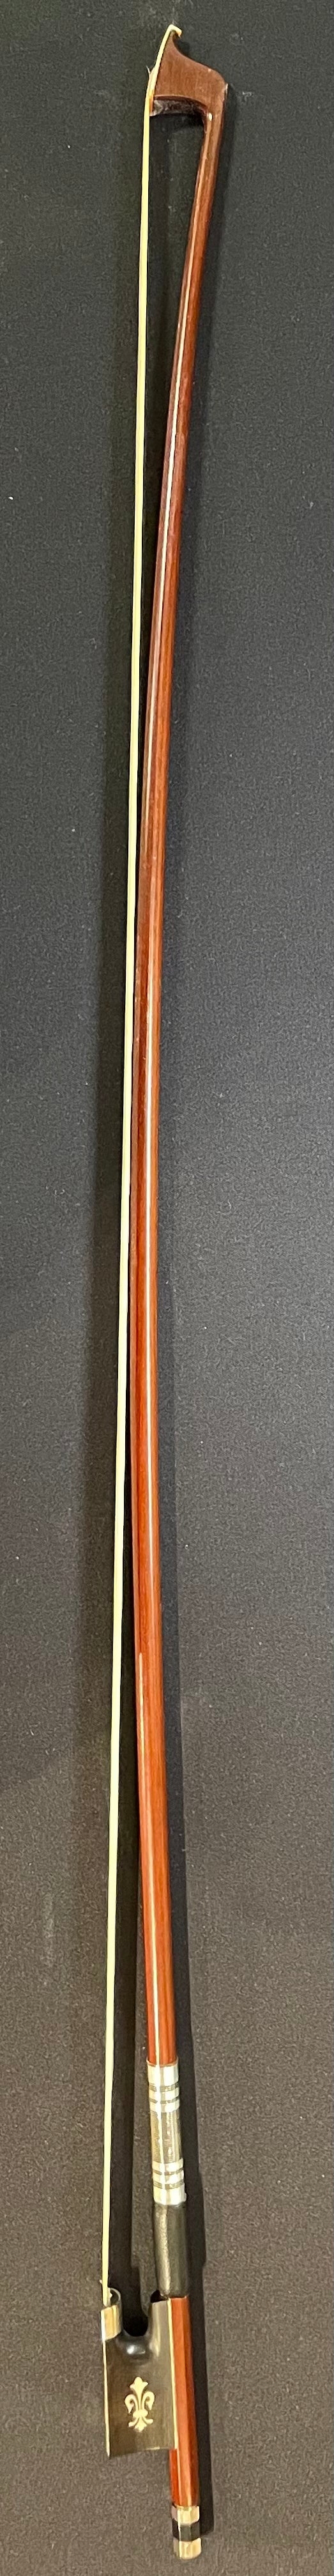 4/4 Violin Bow - LSM Wood Model